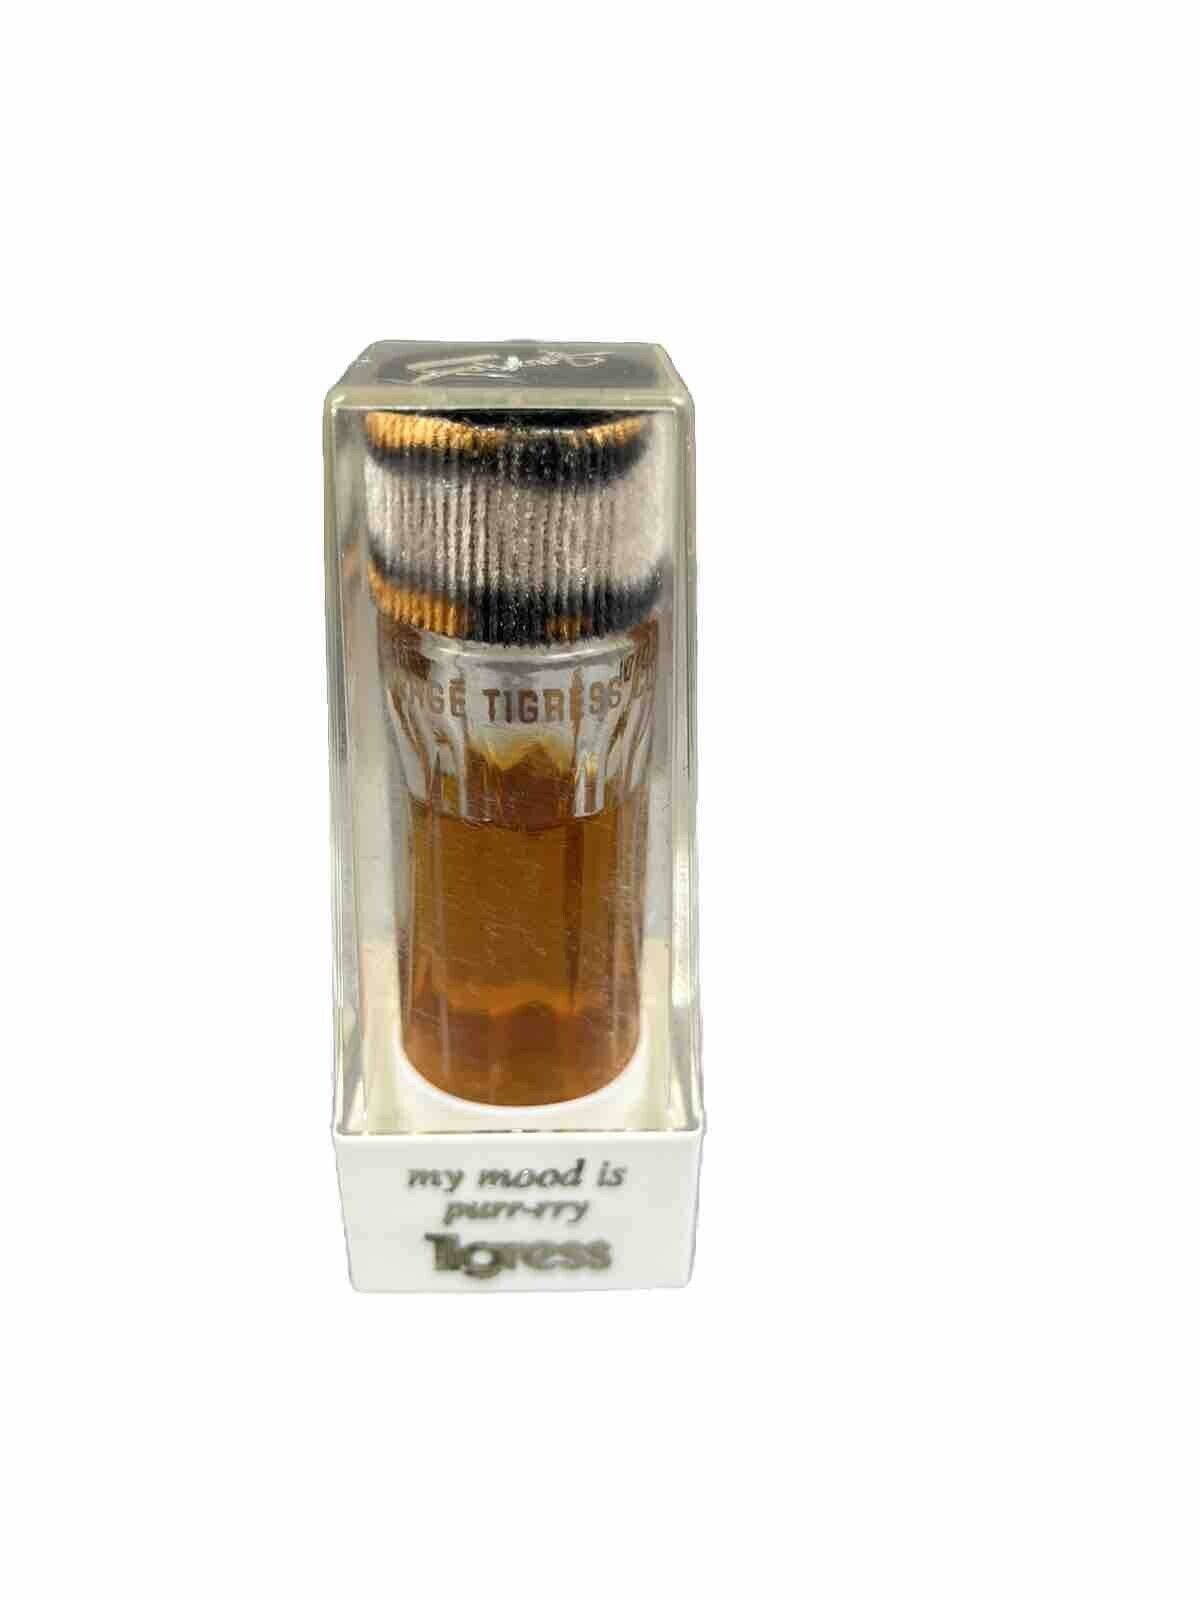 Vintage Faberge Tigress Cologne Perfume Fragrance 1/2 oz Splash Bottle 2/3 full